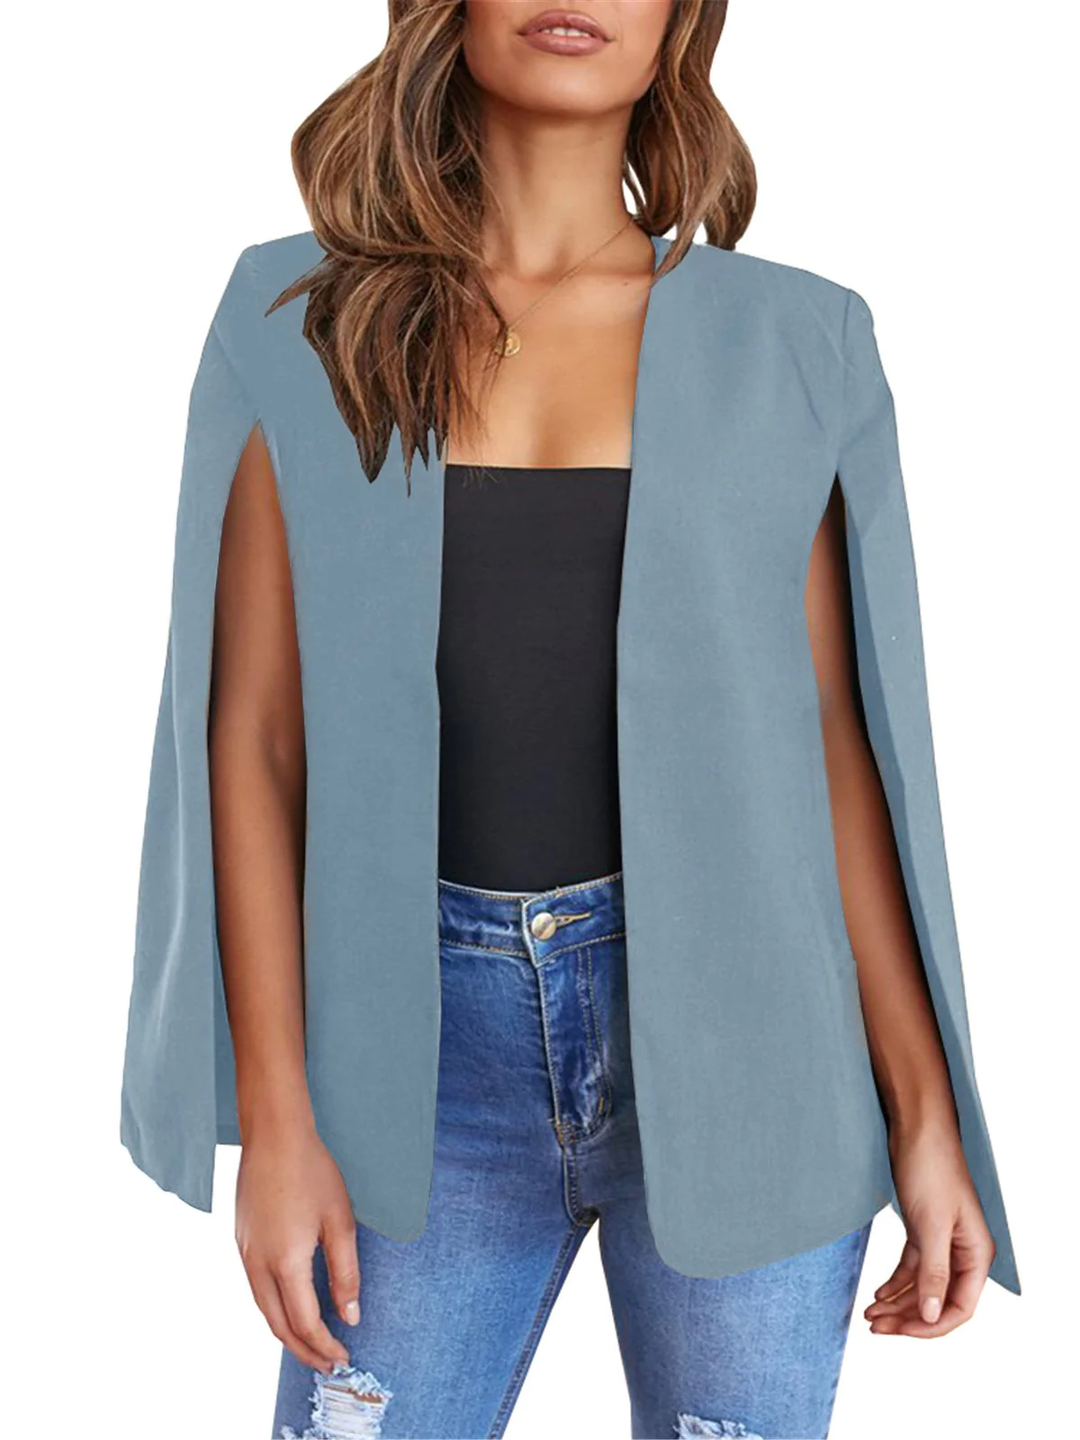 Women's Elegant Blazer Cape Open Front Split Sleeve Blazer Jacket Coat